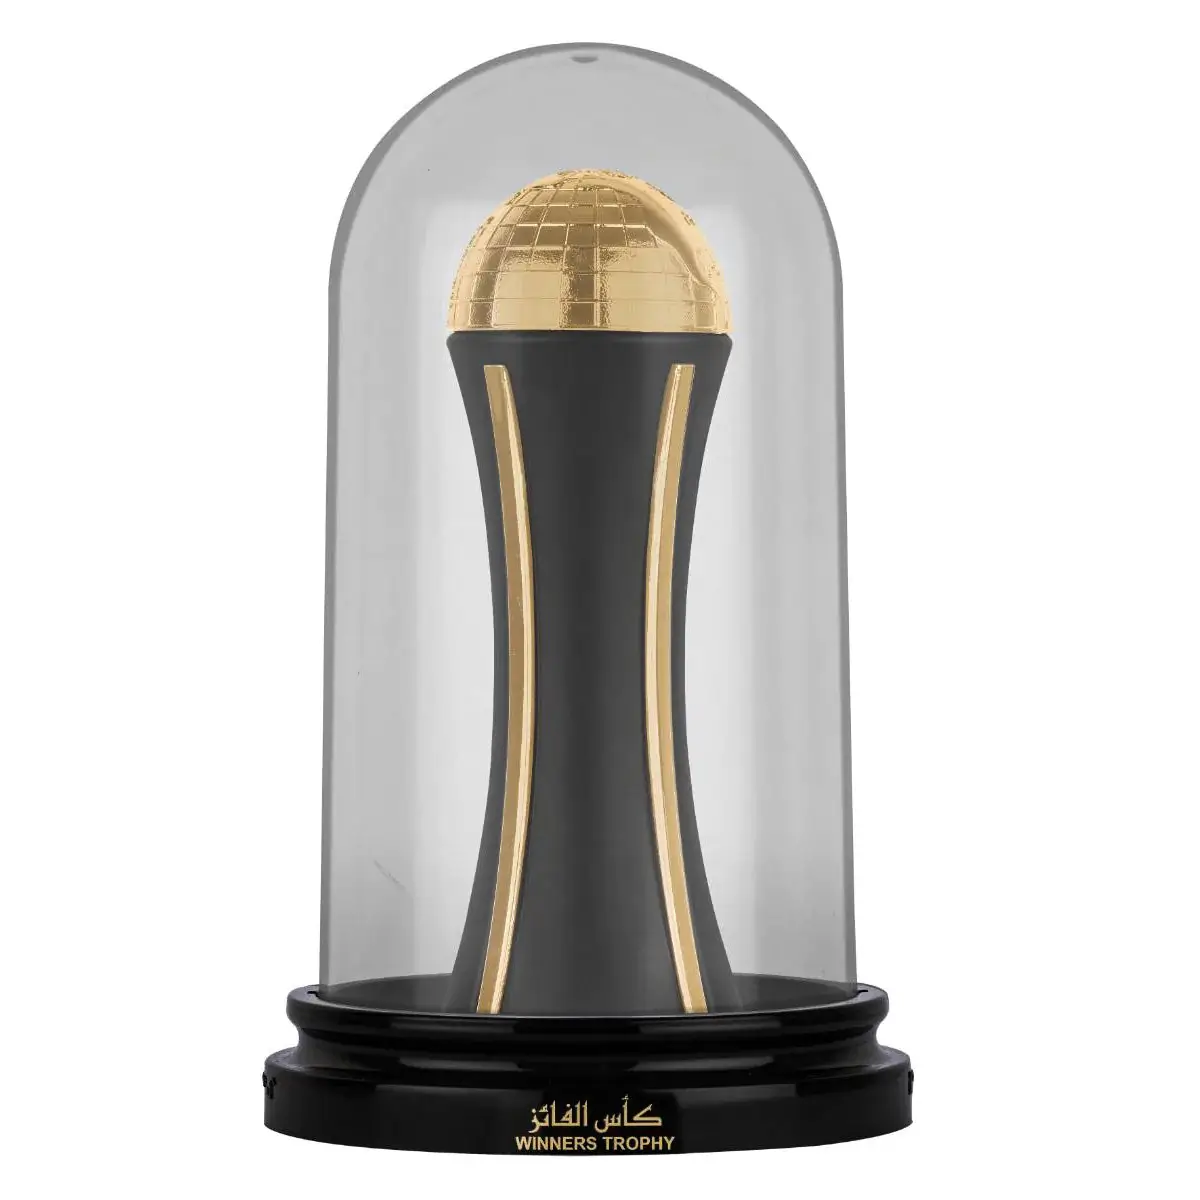 Winners Trophy Gold Perfume / Eau De Parfum 100Ml By Lattafa Pride 